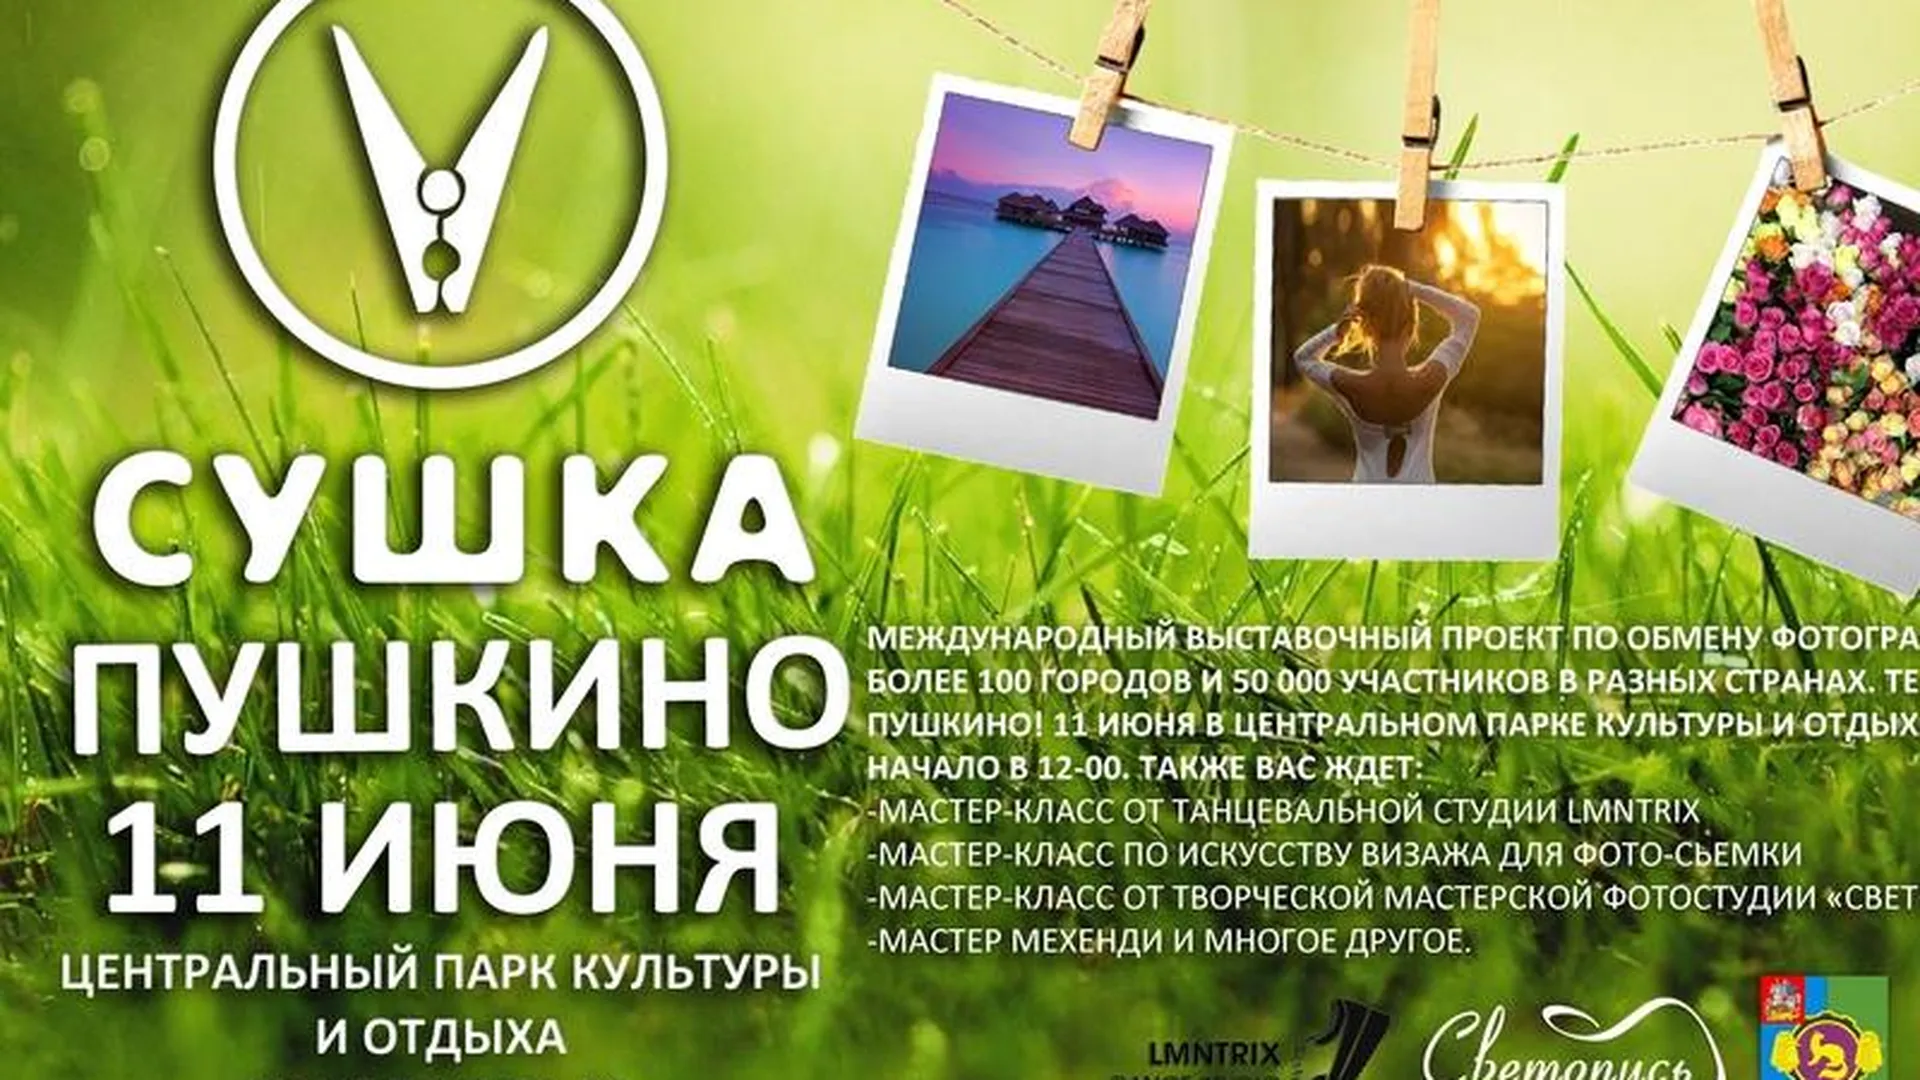 Креативная «Фотосушка» пройдет в Пушкино